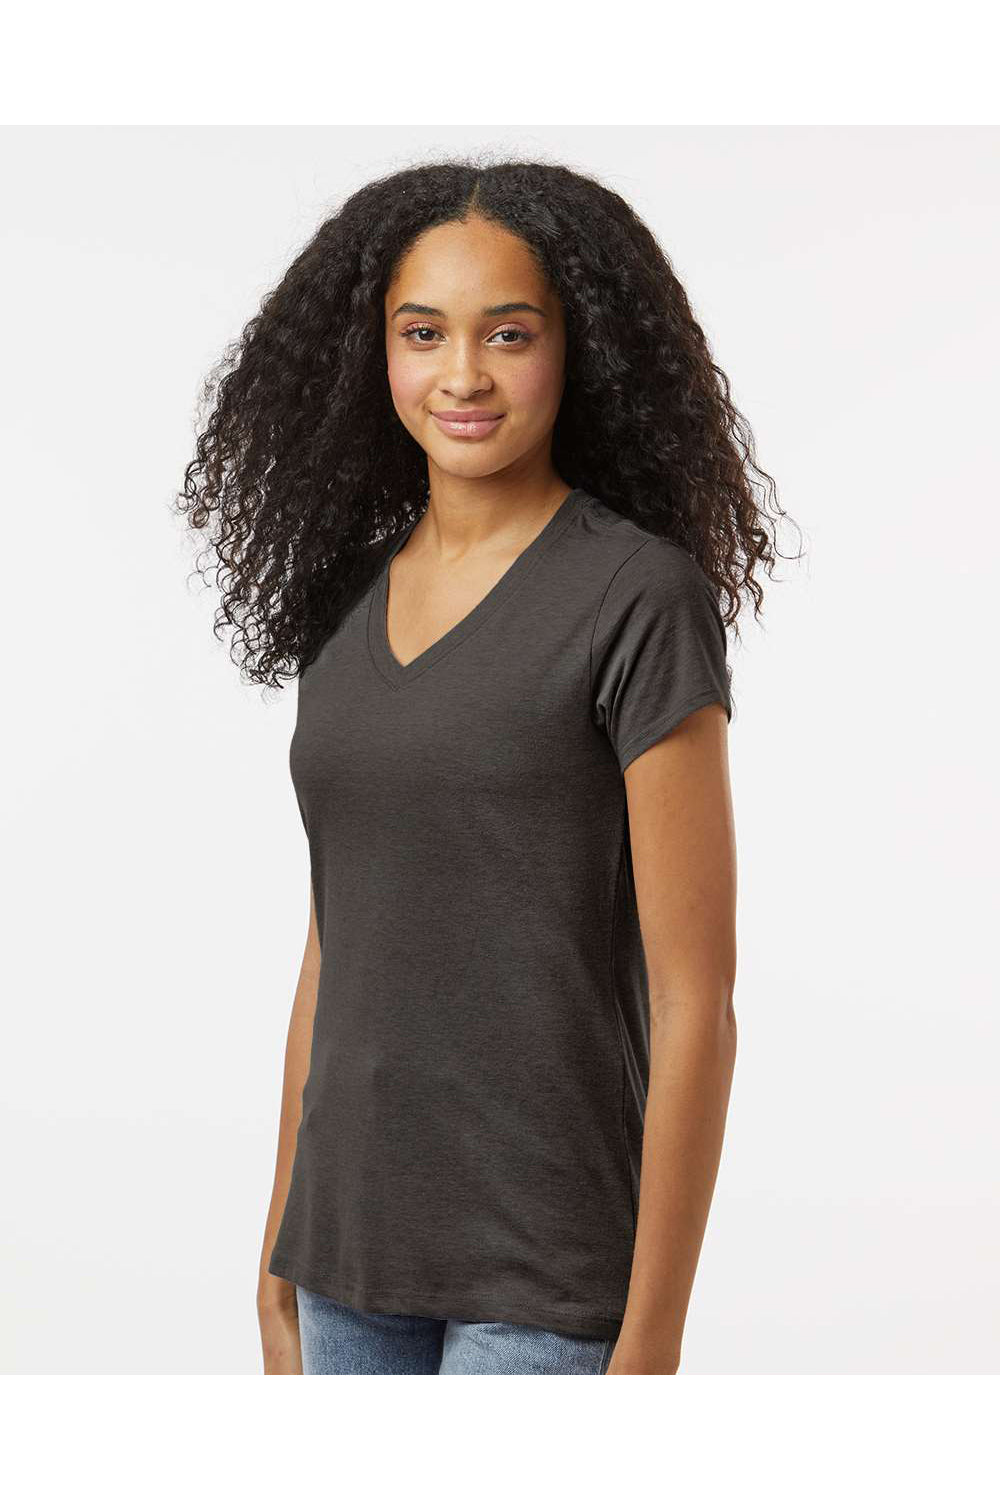 Kastlfel 2011 Womens RecycledSoft Short Sleeve V-Neck T-Shirt Carbon Grey Model Side